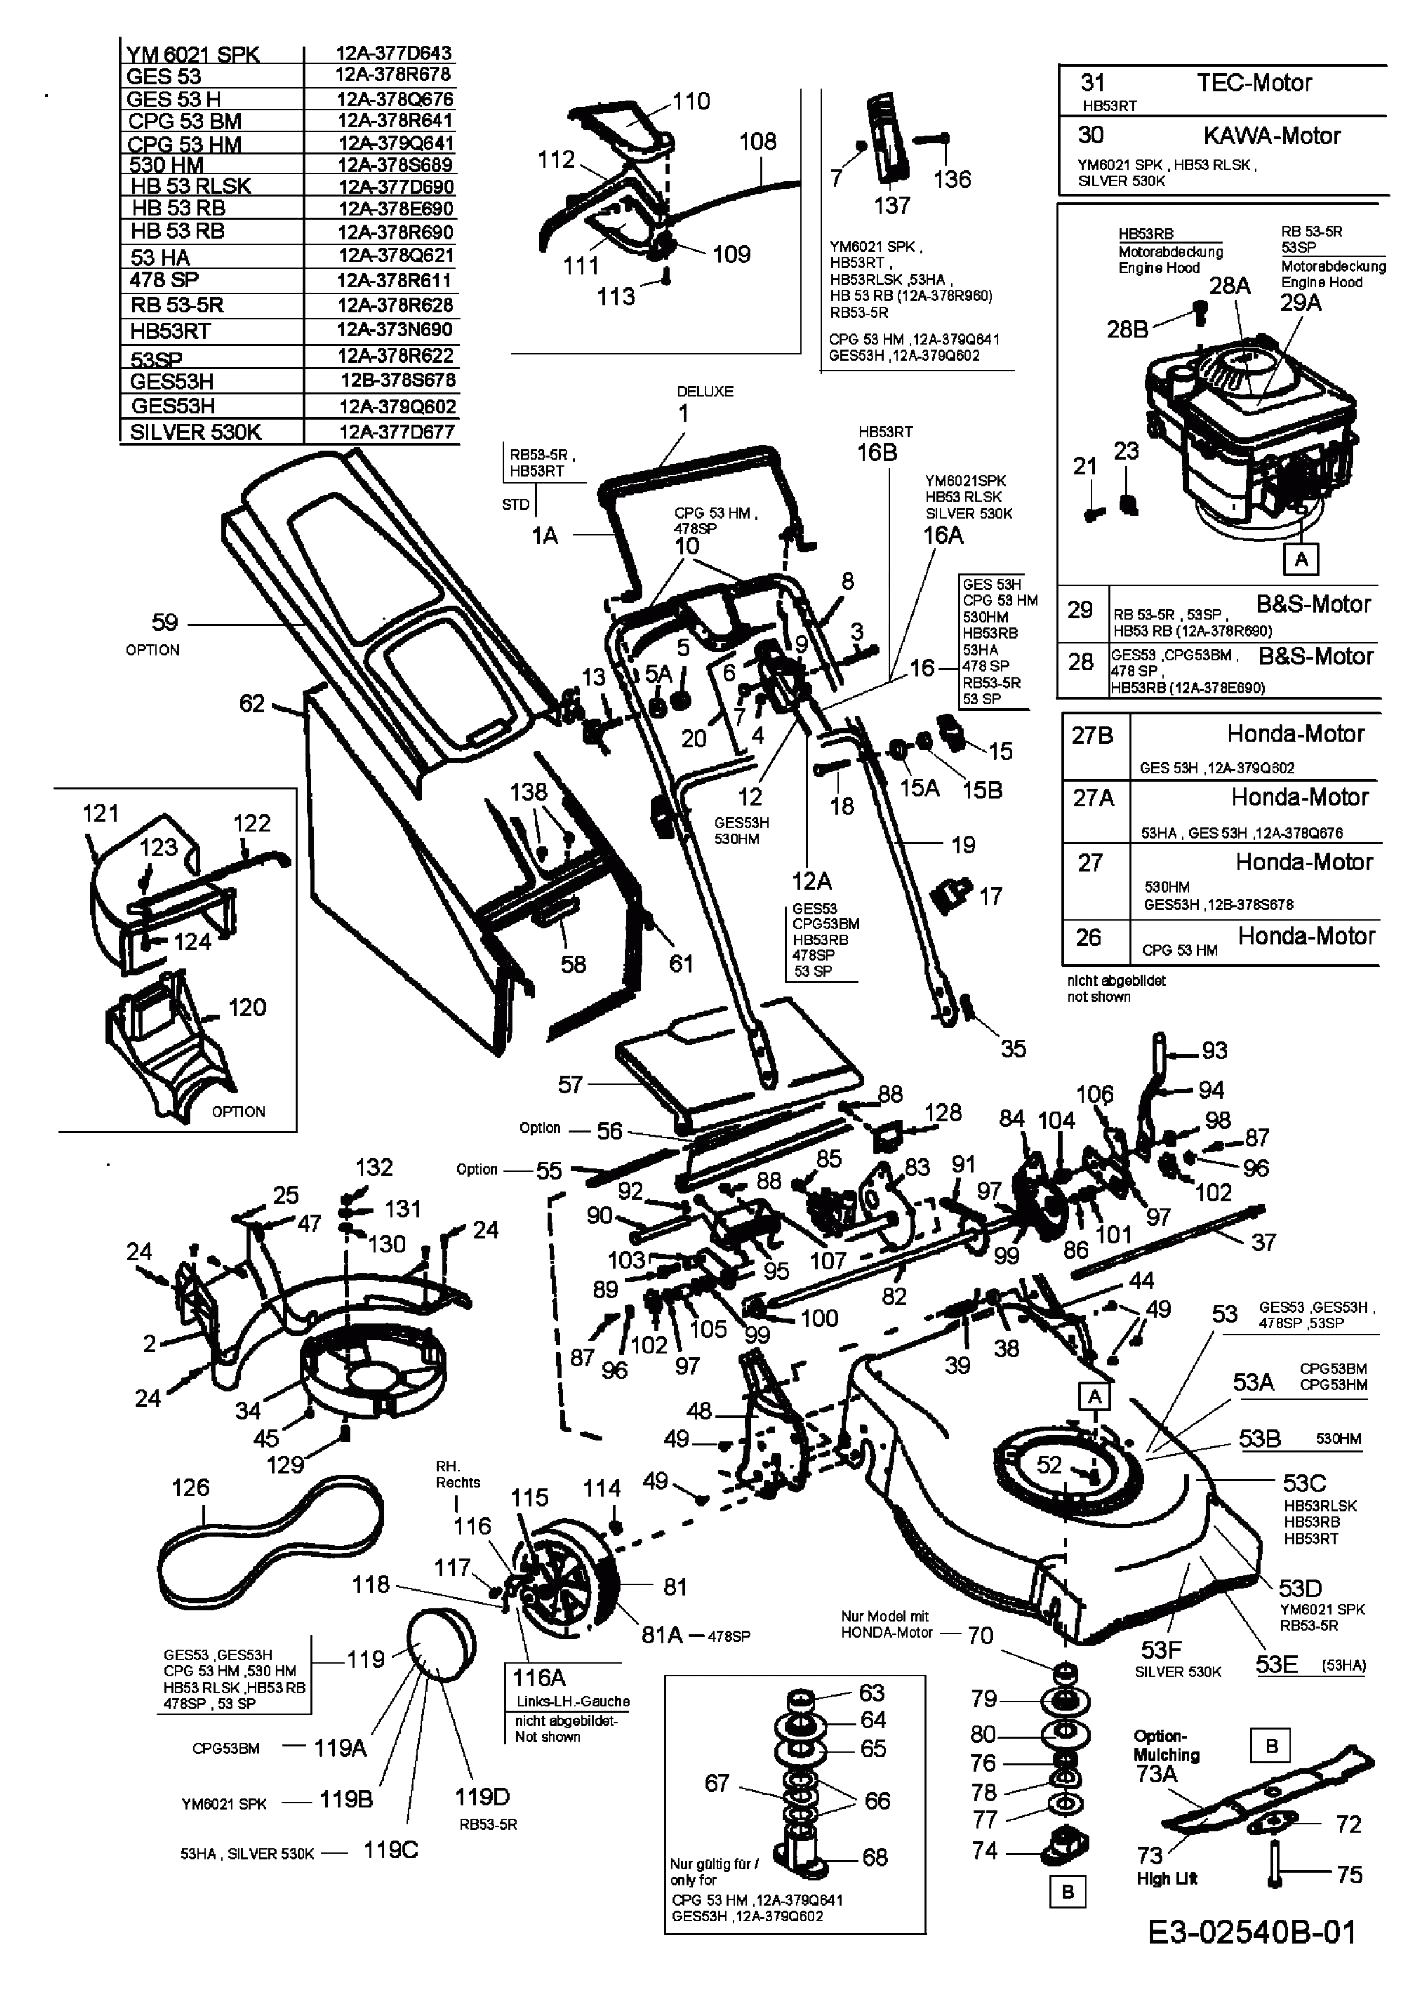 MTD Артикул 12A-378R678 (год выпуска 2006). Основная деталировка